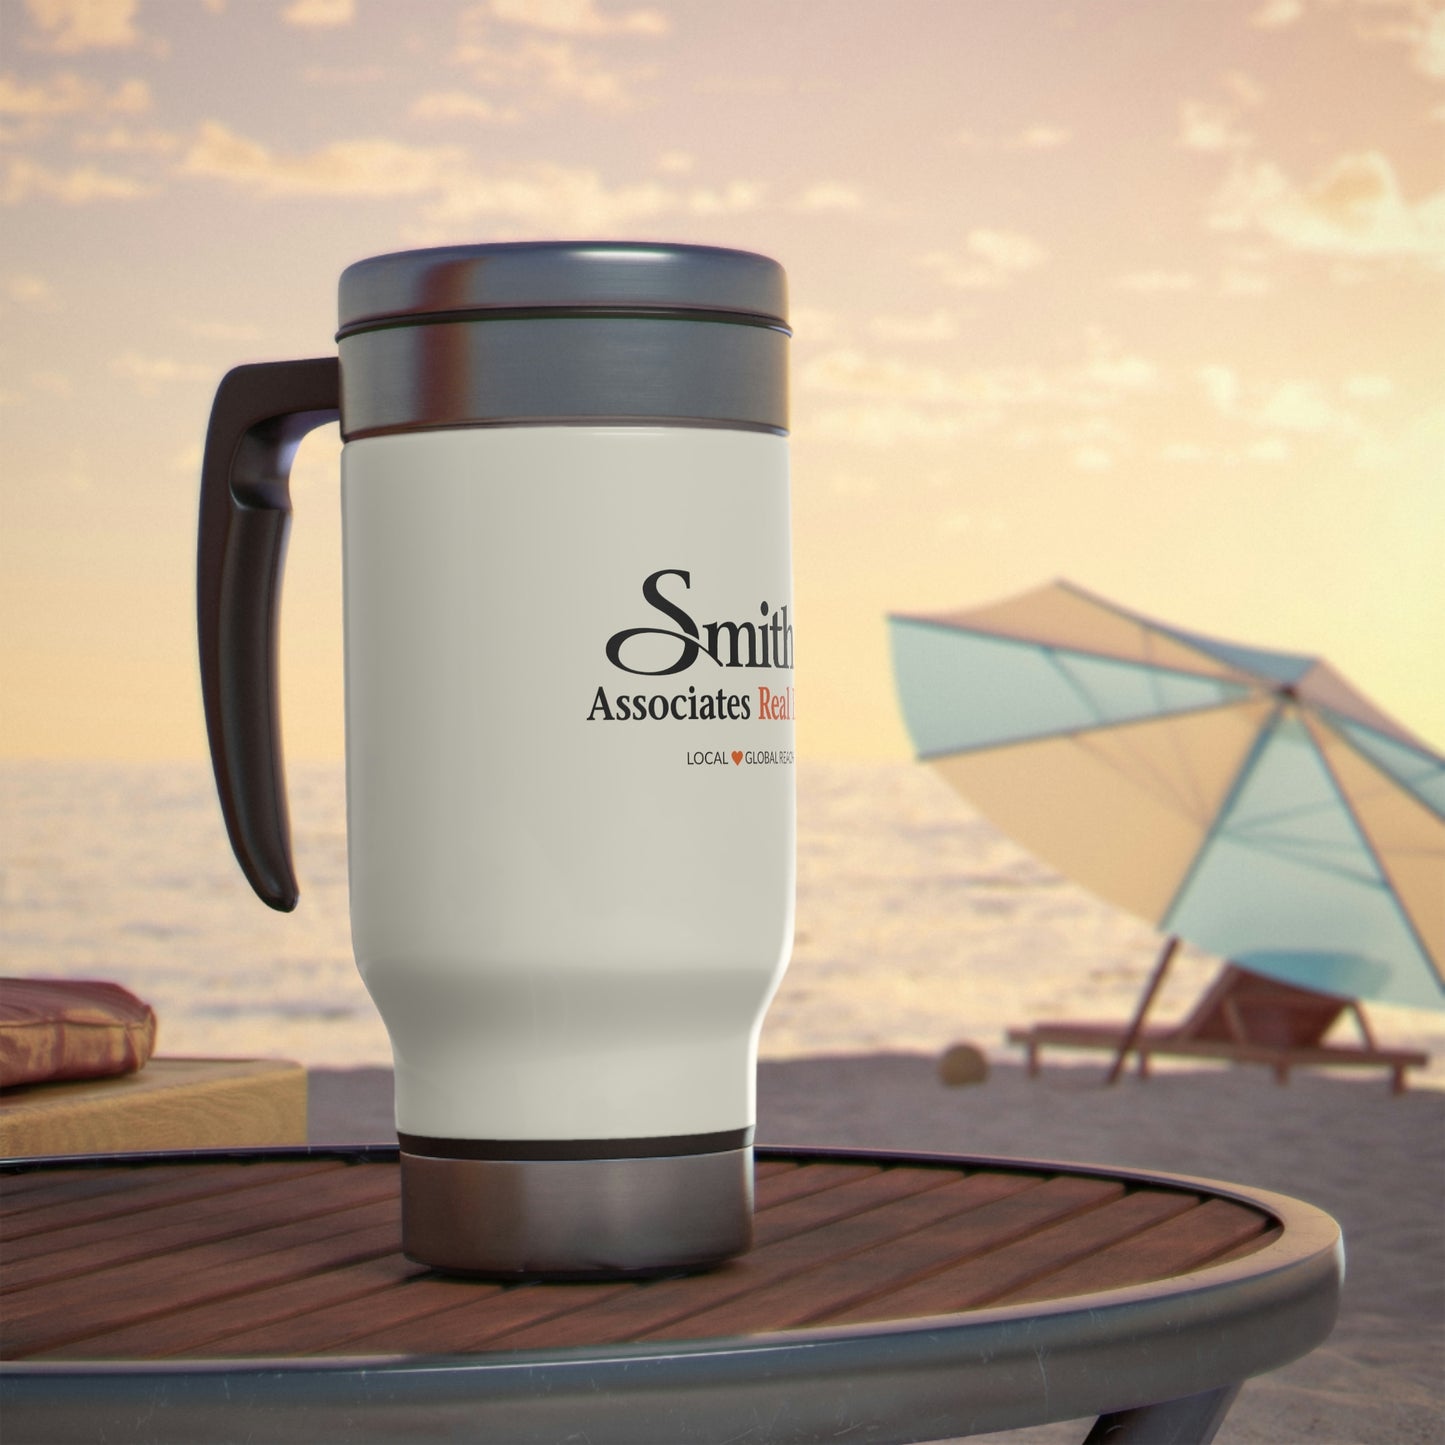 Smith & Associates Stainless Steel Travel Mug with Handle, 14oz